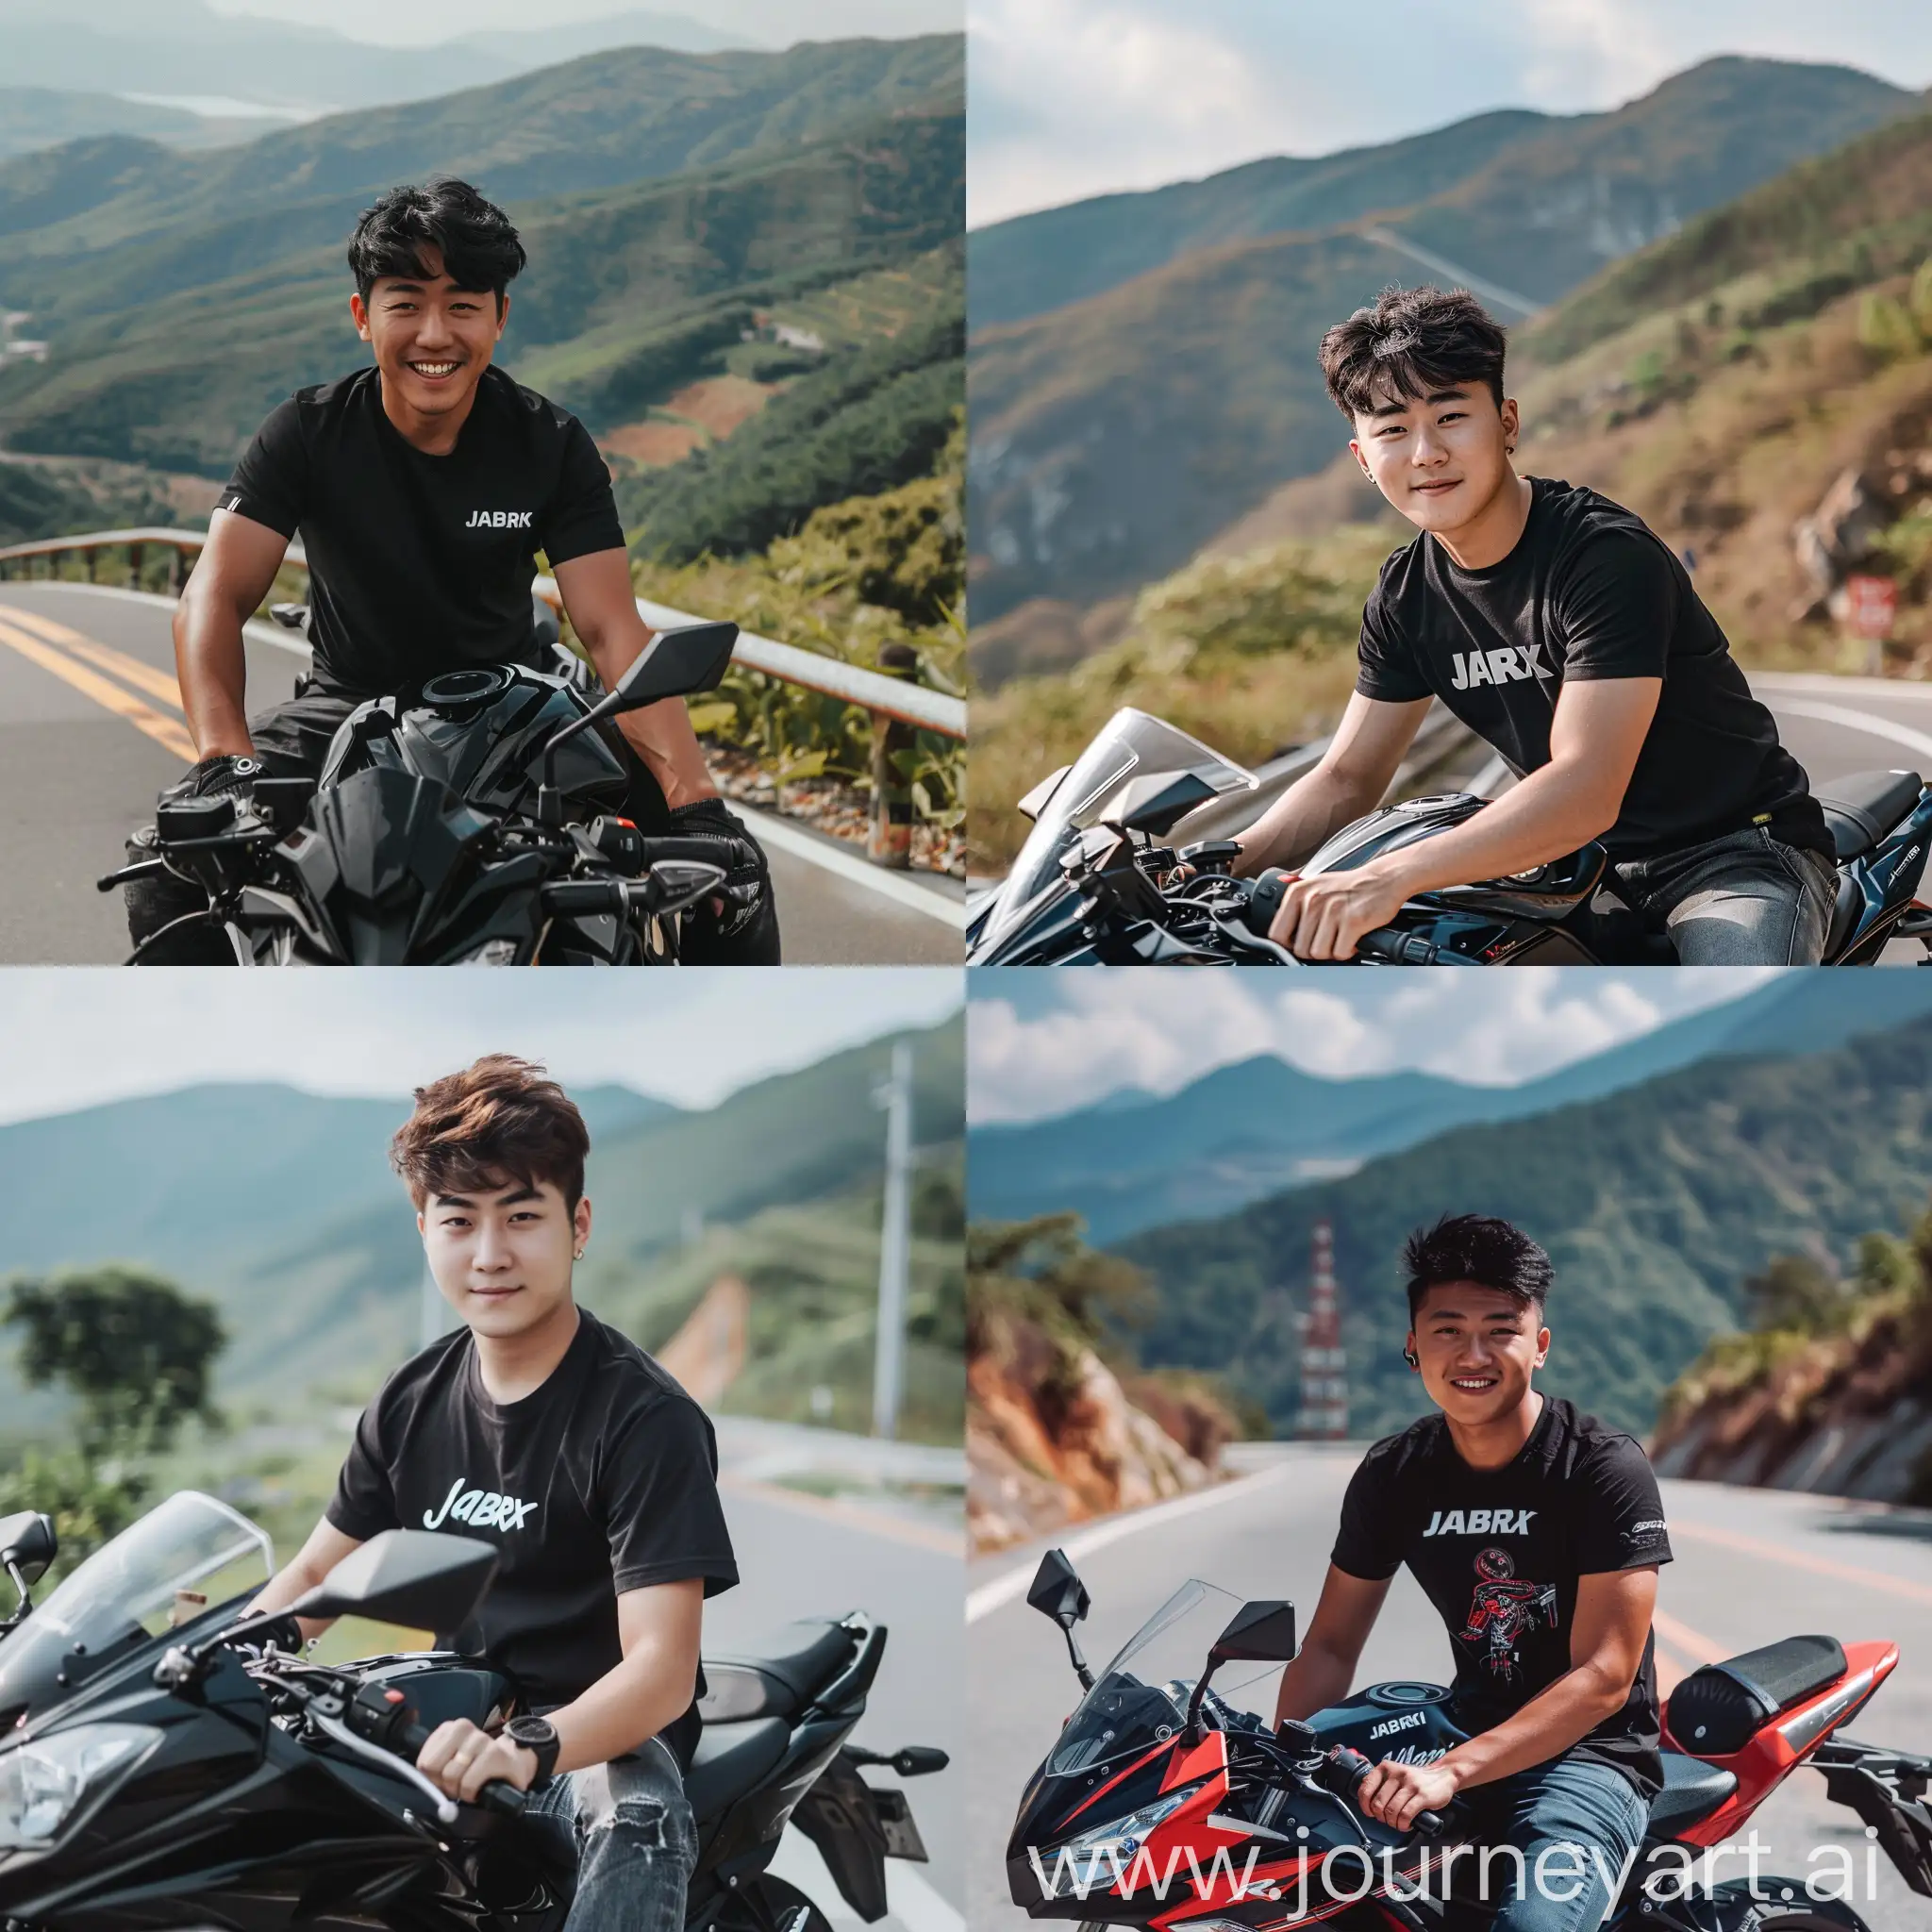 Young-Korean-Man-in-Black-TShirt-Smiling-on-Ninja-250R-Motorcycle-on-Mountain-Road